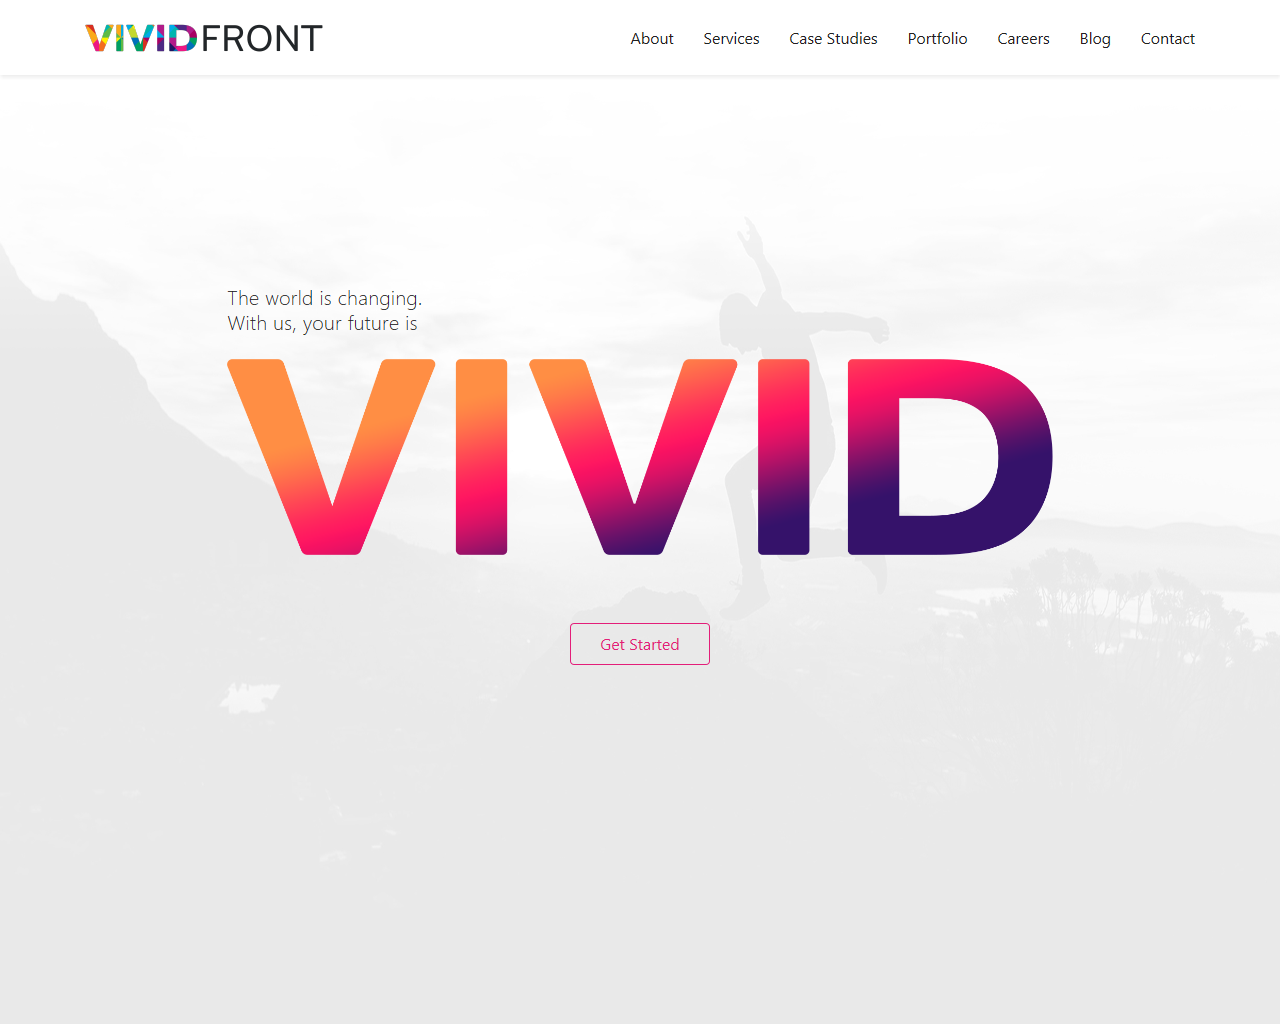 VividFront, LLC